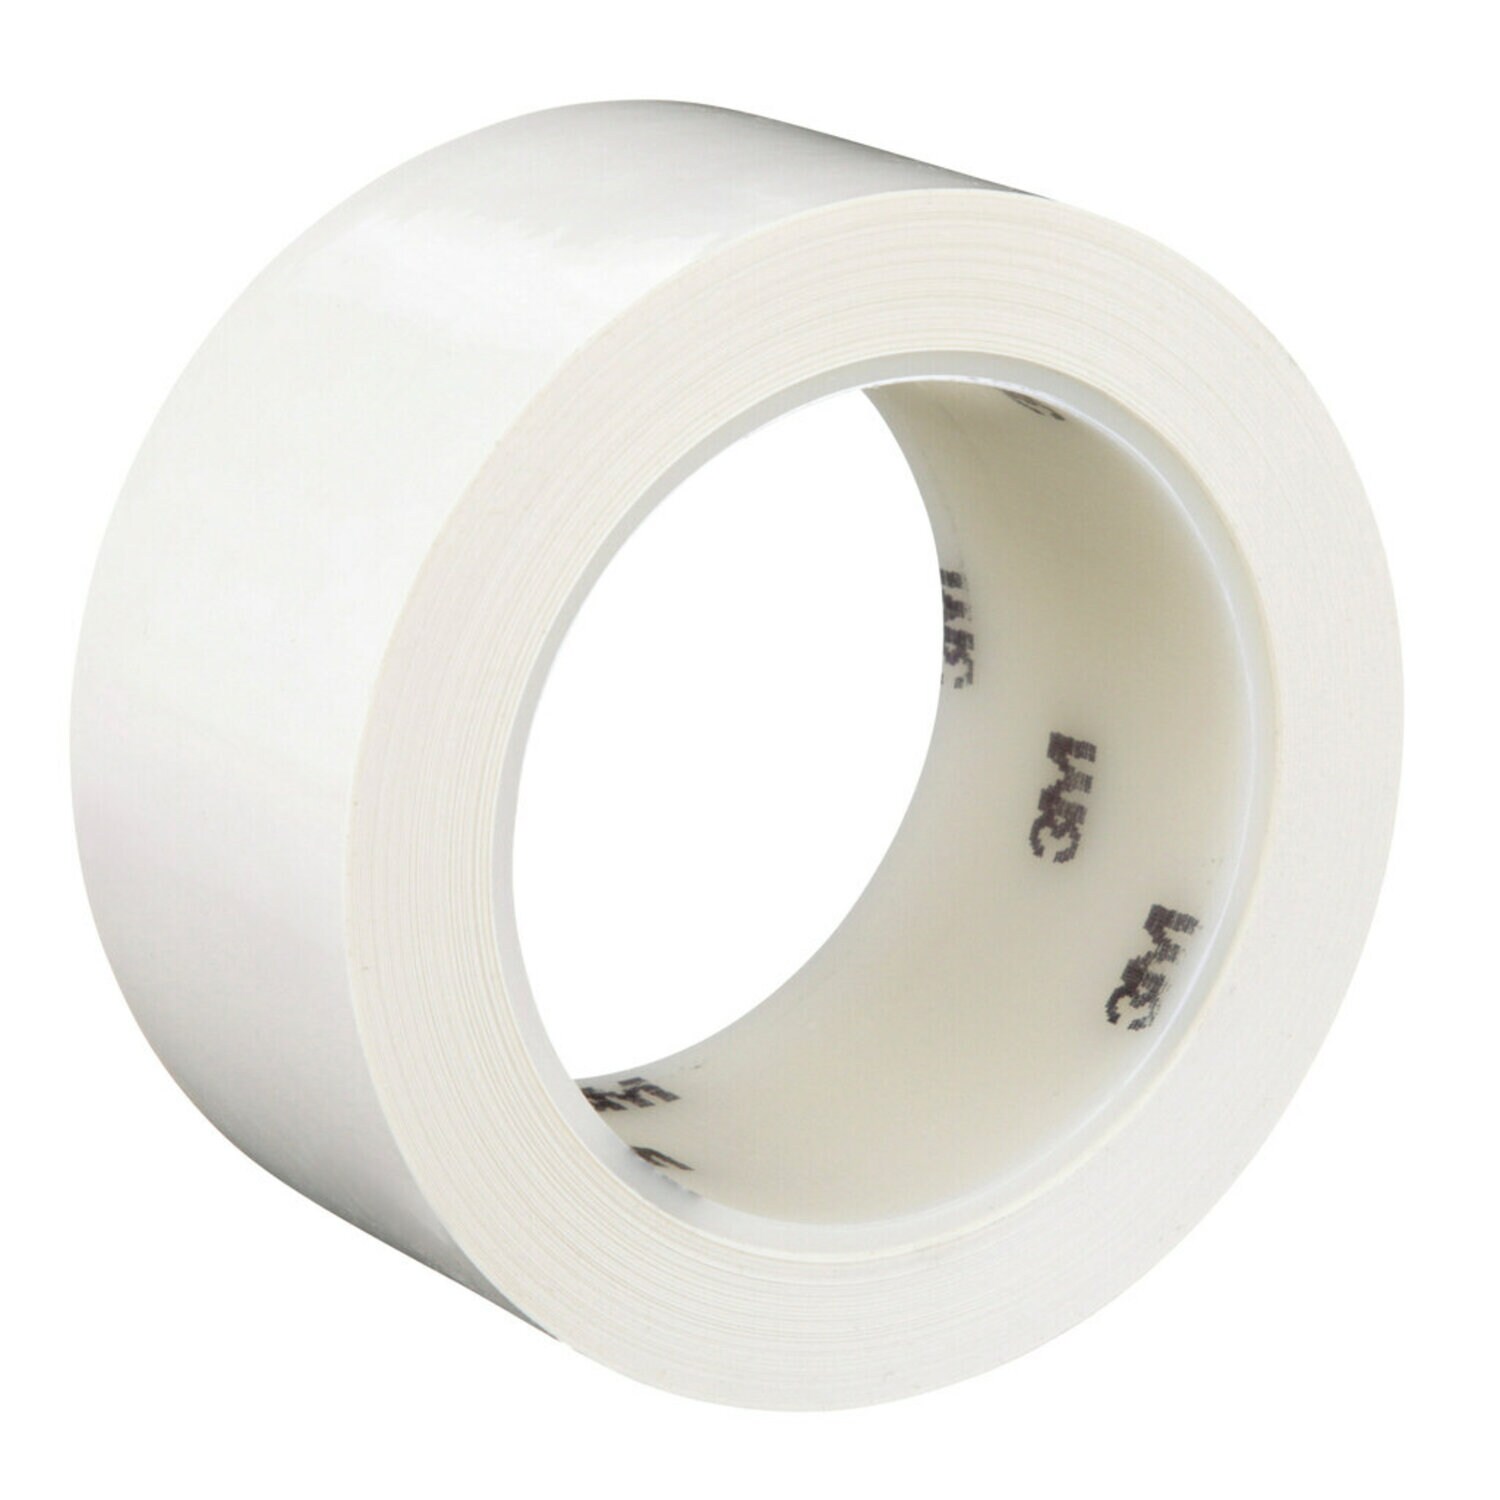 7000048440 - 3M Polyethylene Tape 483, White, 2 in x 36 yd, 5.0 mil, 24 rolls per
case